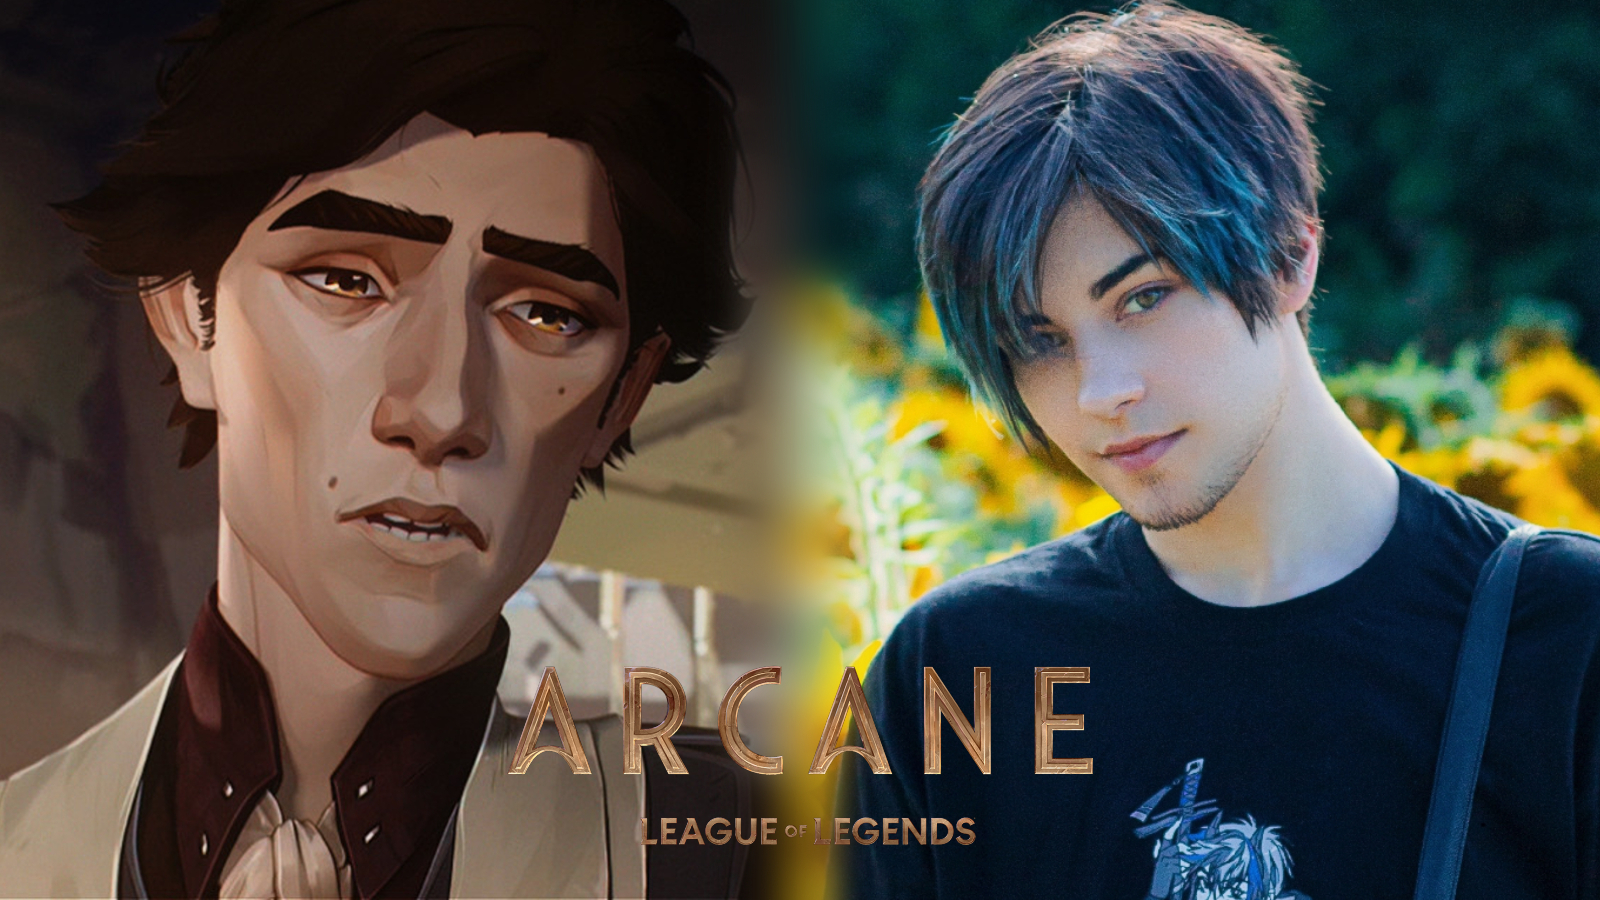 League of Legends Arcane cosplayer reinvents the Hextech wheel as Viktor